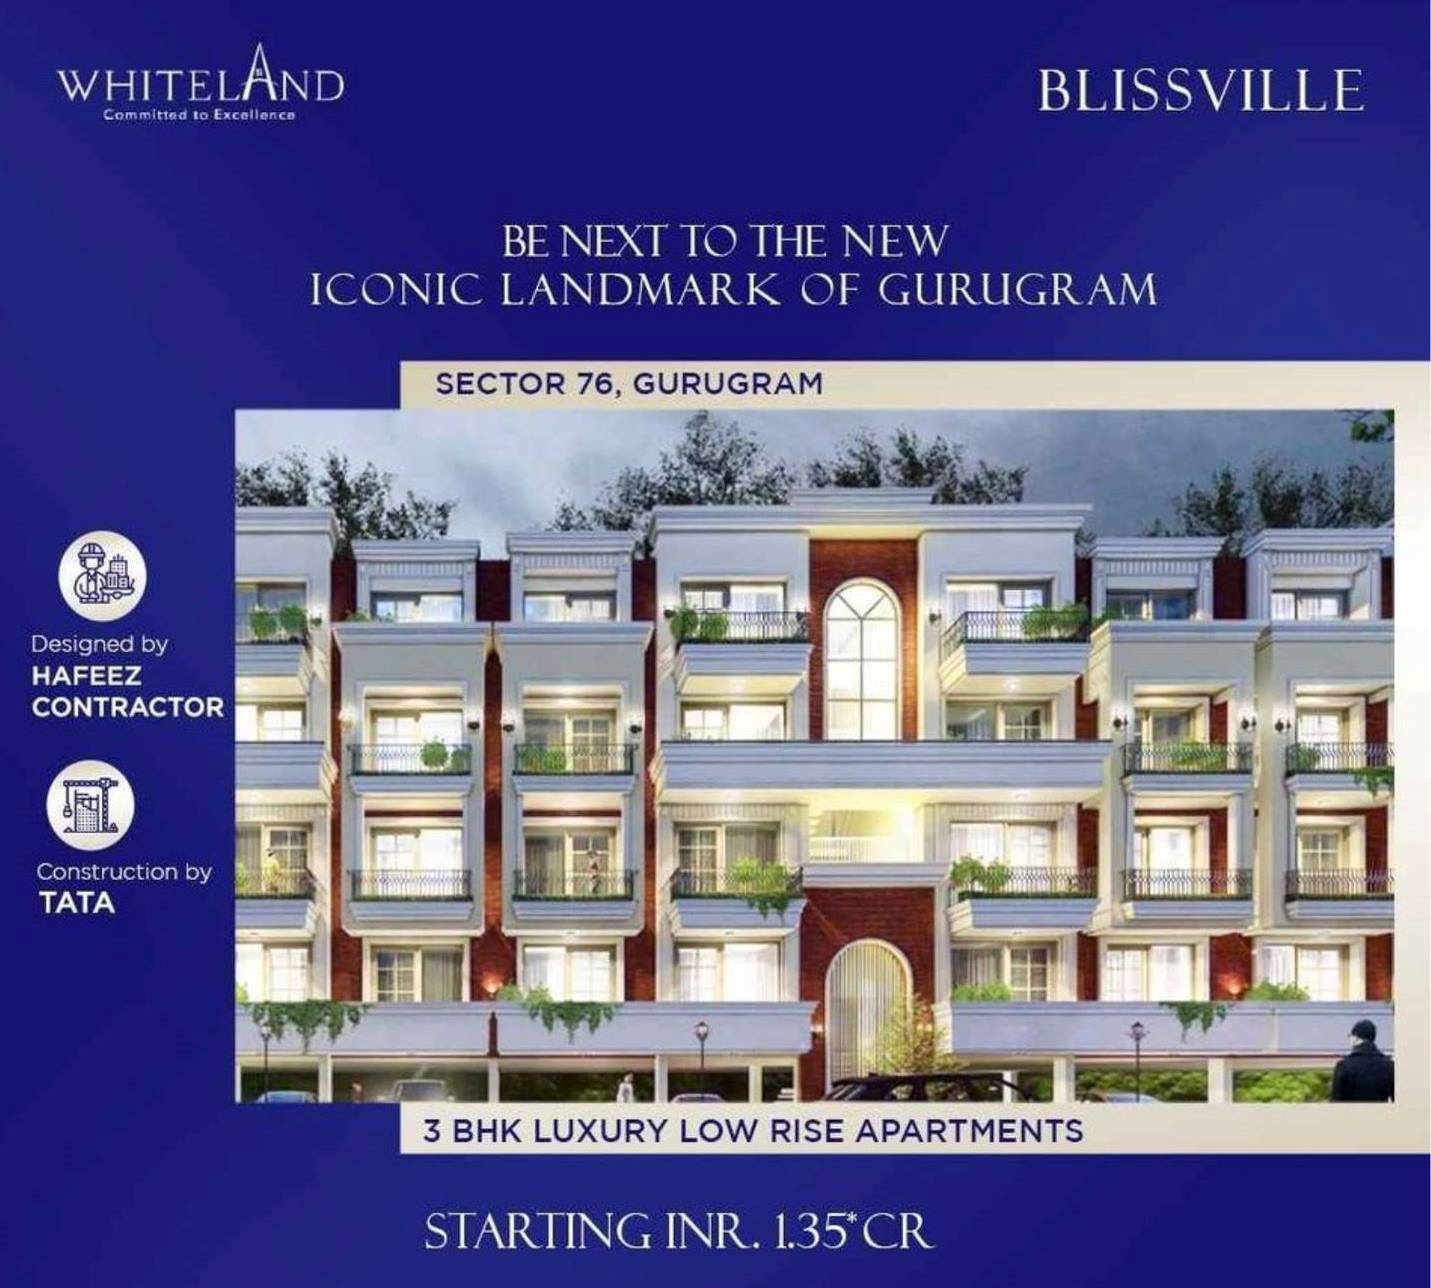 Whiteland Blissville be next to the new iconic landmark of Gurgaon Update